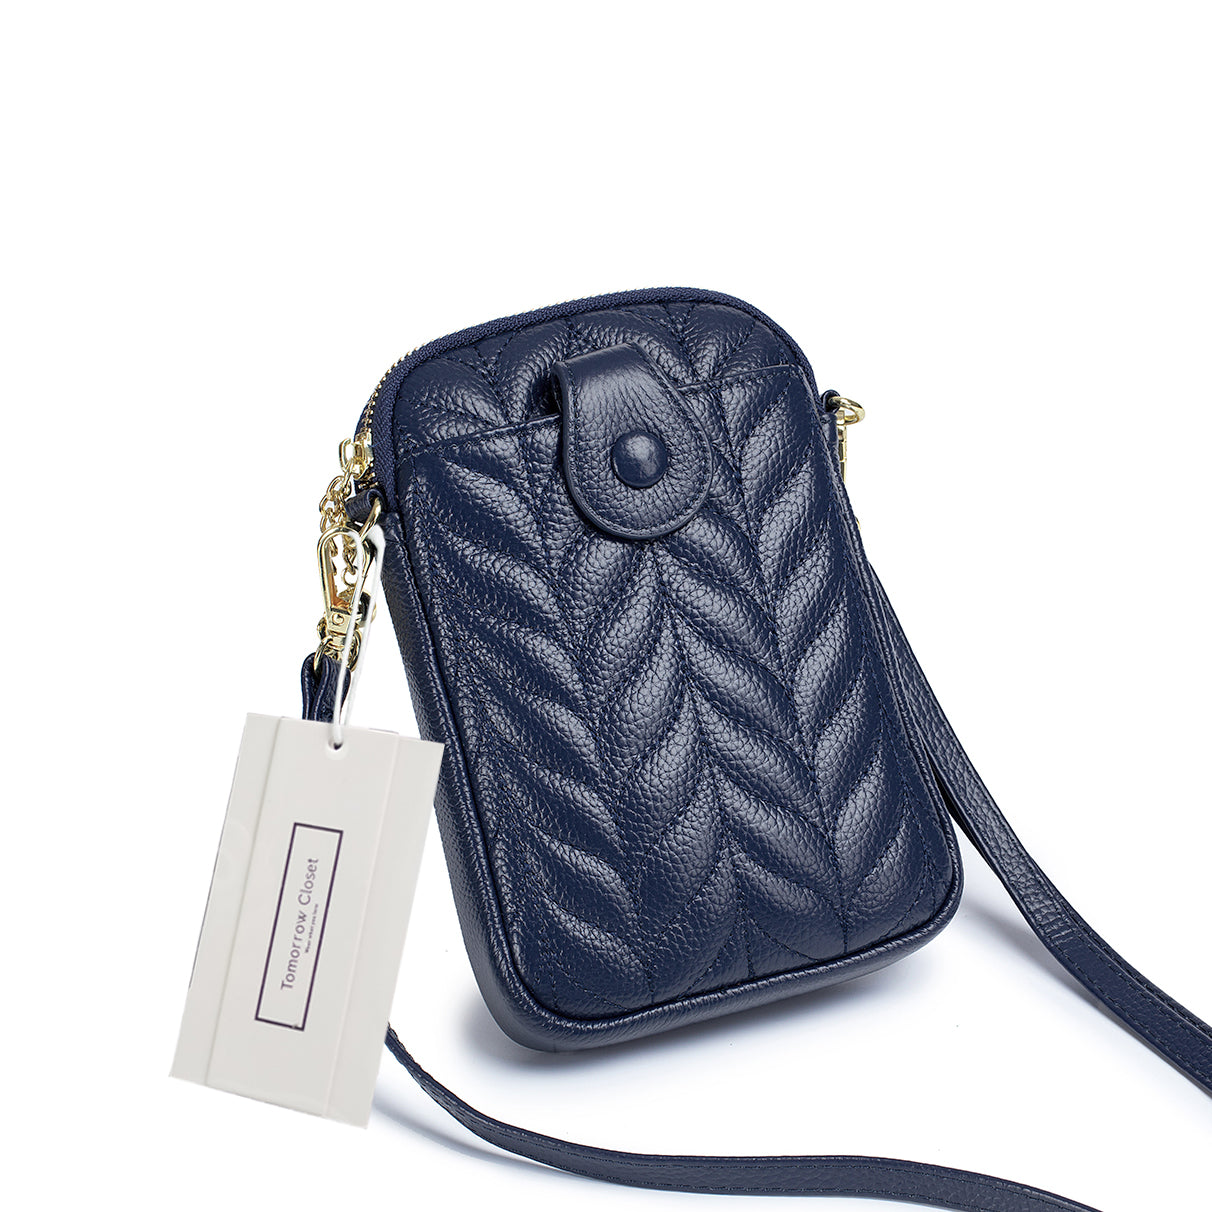 Women's genuine cowhide leather handphone bag Mirren Chevron design